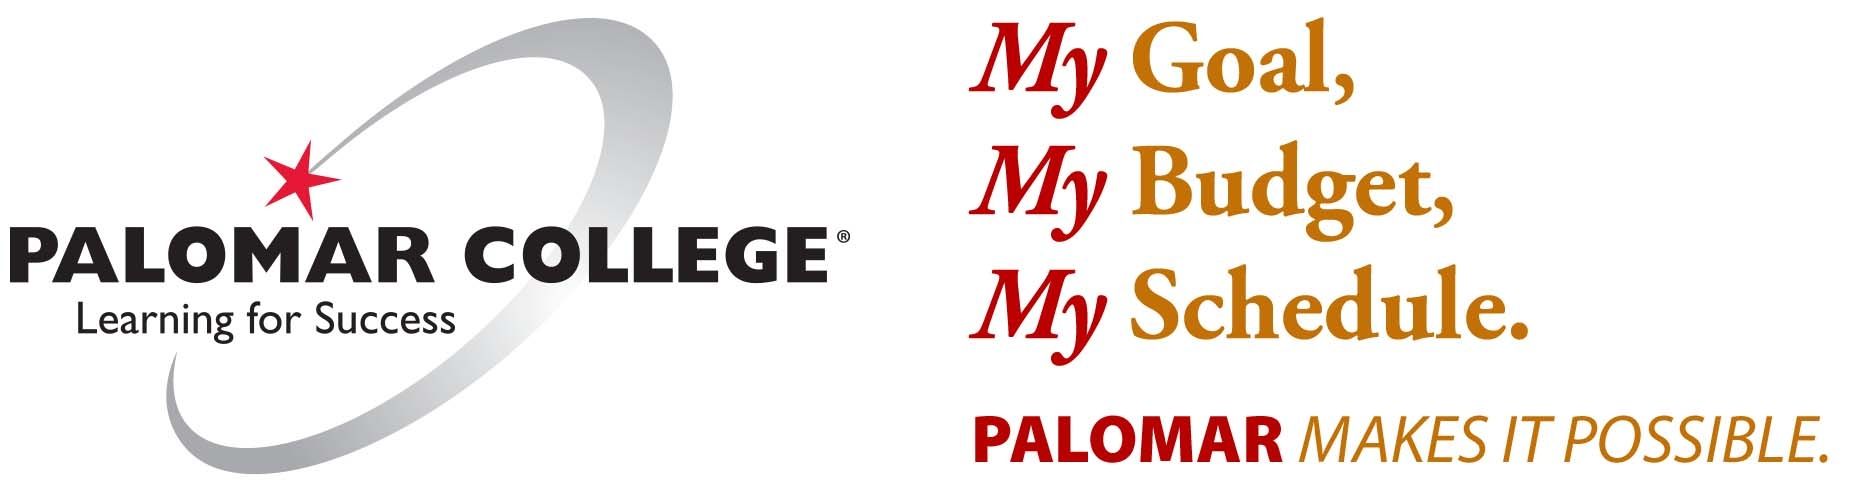 palomar college